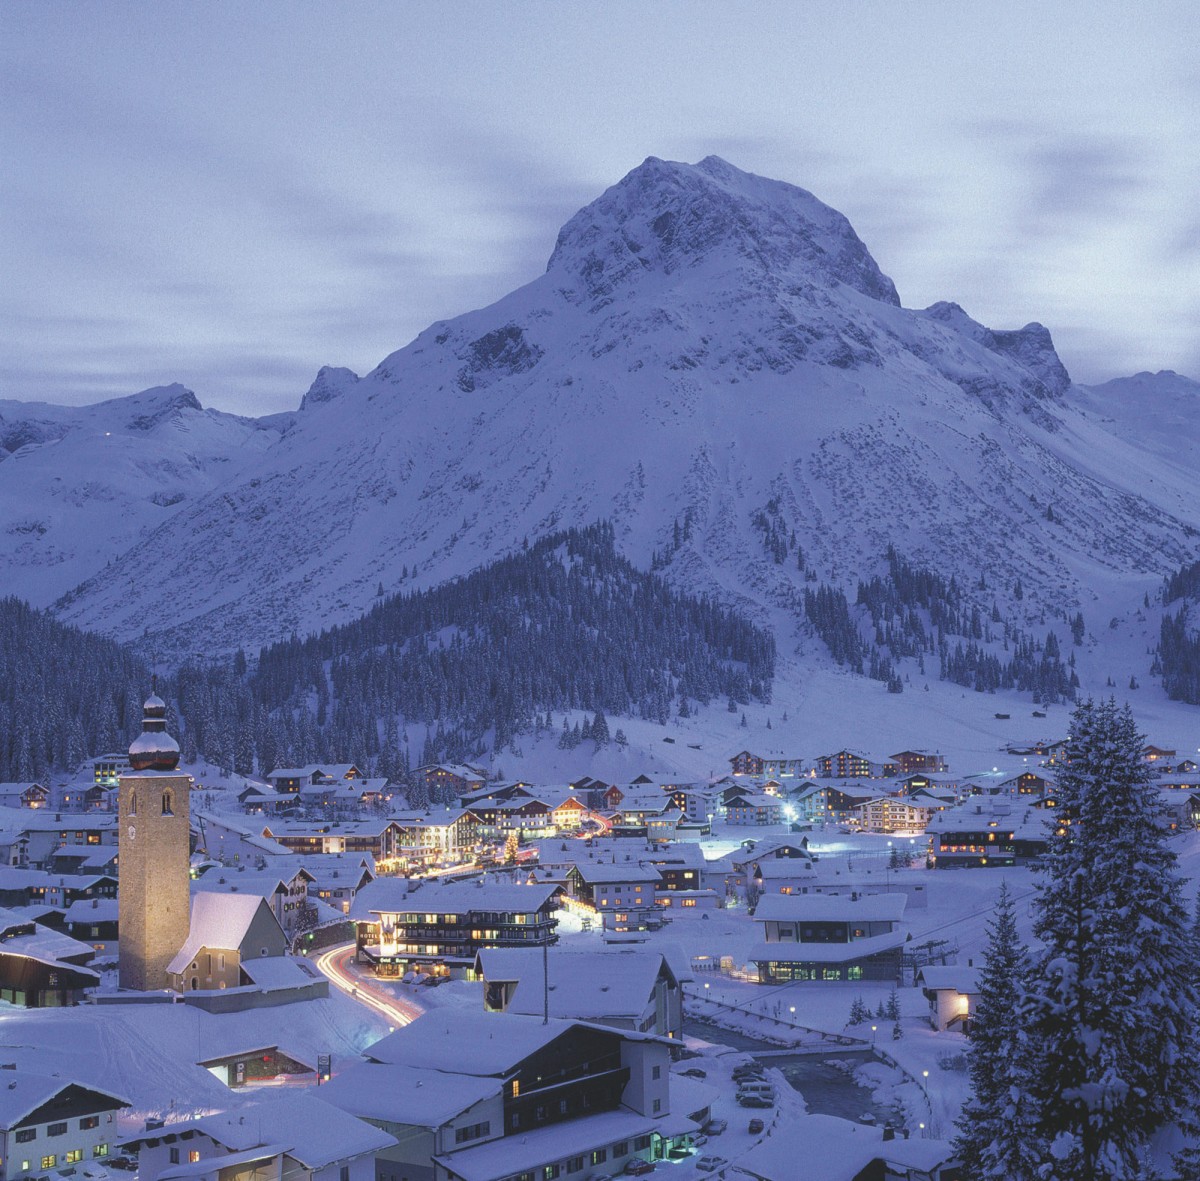 Ski resort Lech in the Austrian Alps